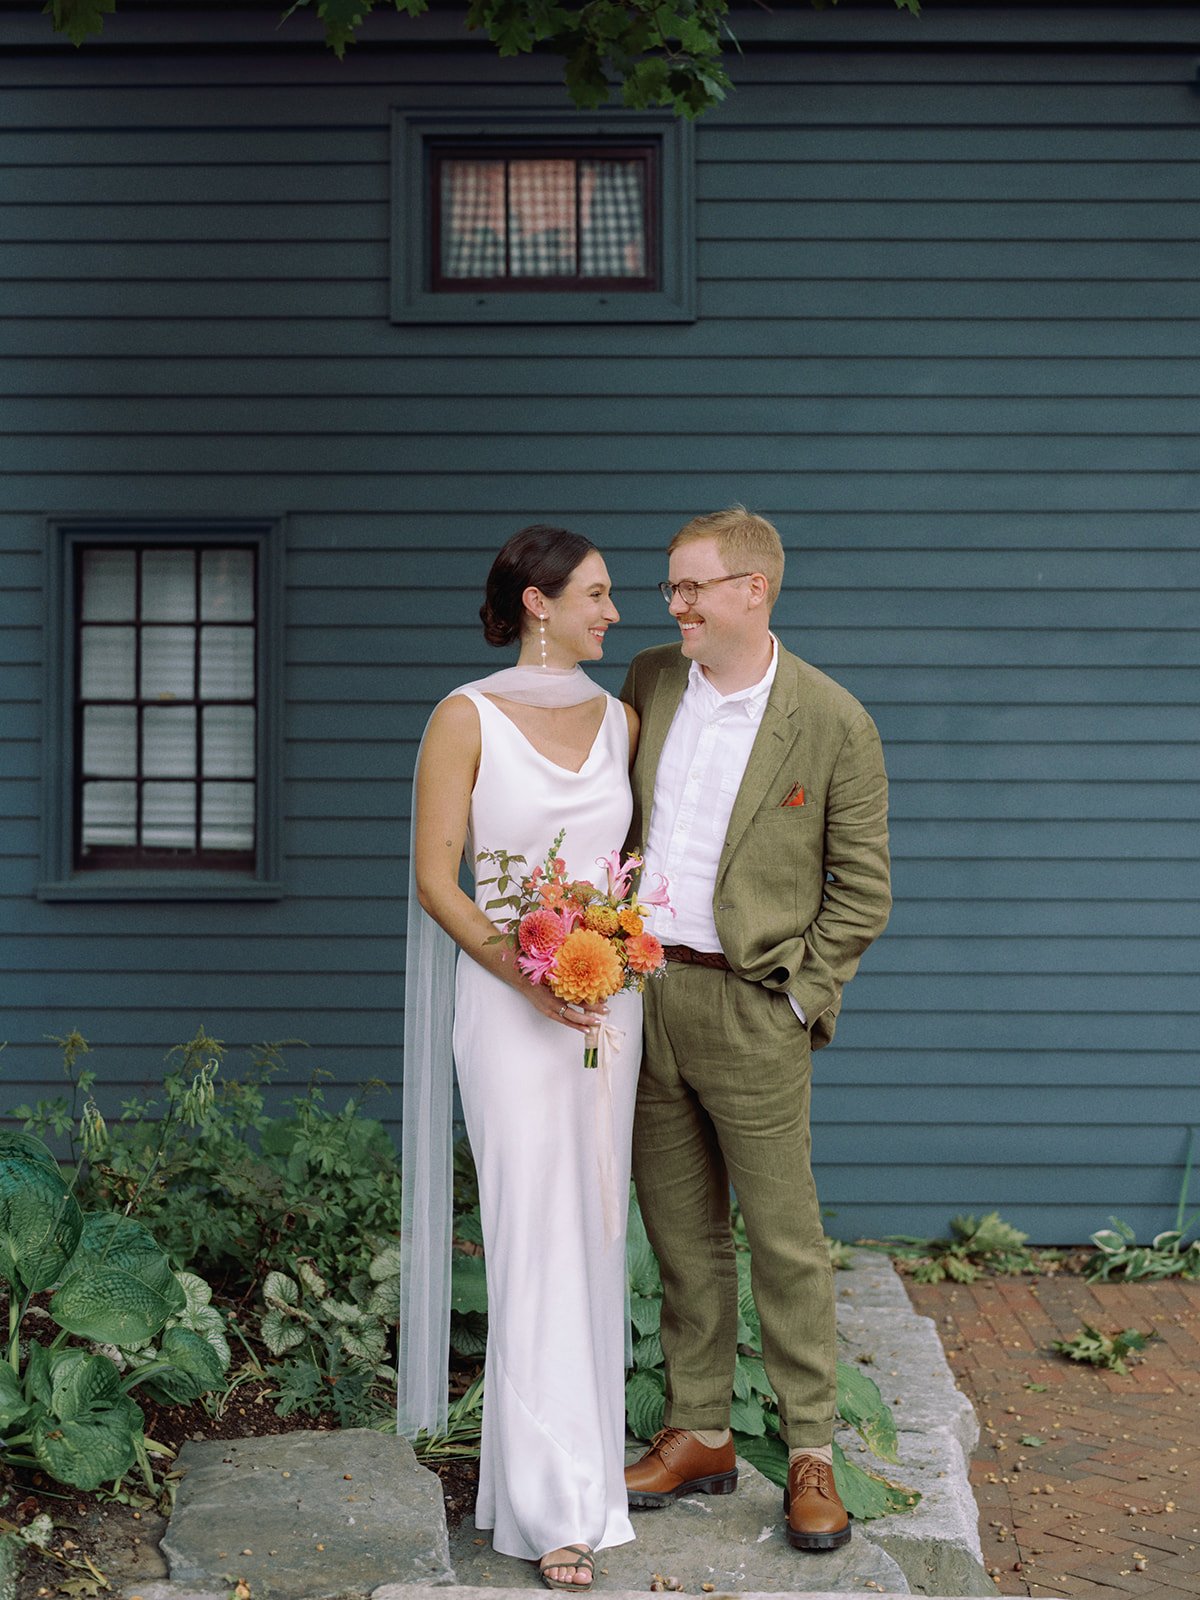 Best-Film-35mm-Austin-Wedding-Photographer-Portland-Maine-City-Hall-Super8-39.jpg